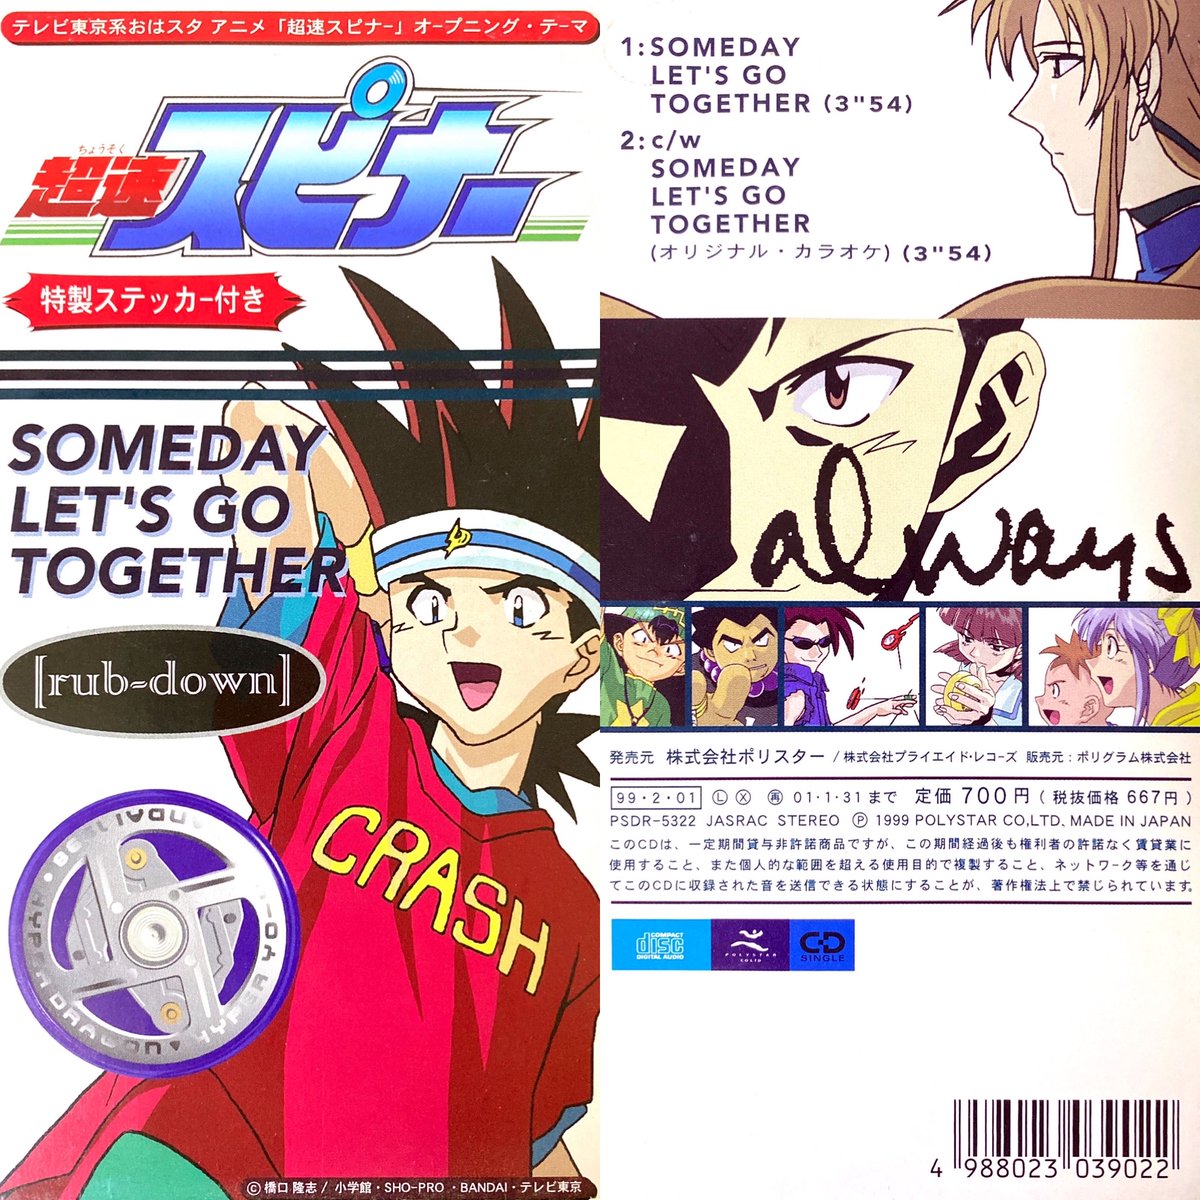 OMEDAY LET'S GO TOGETHER/rub-down 超速スピナー OP1(1998年~1999年) #アニメ #アニソン #8cmCD #短冊CD #超速スピナー #rubdown #ハイパーヨーヨー #90年代 #コロコロコミック #animesong mtbrs.net/ps_anime8cm_B8…